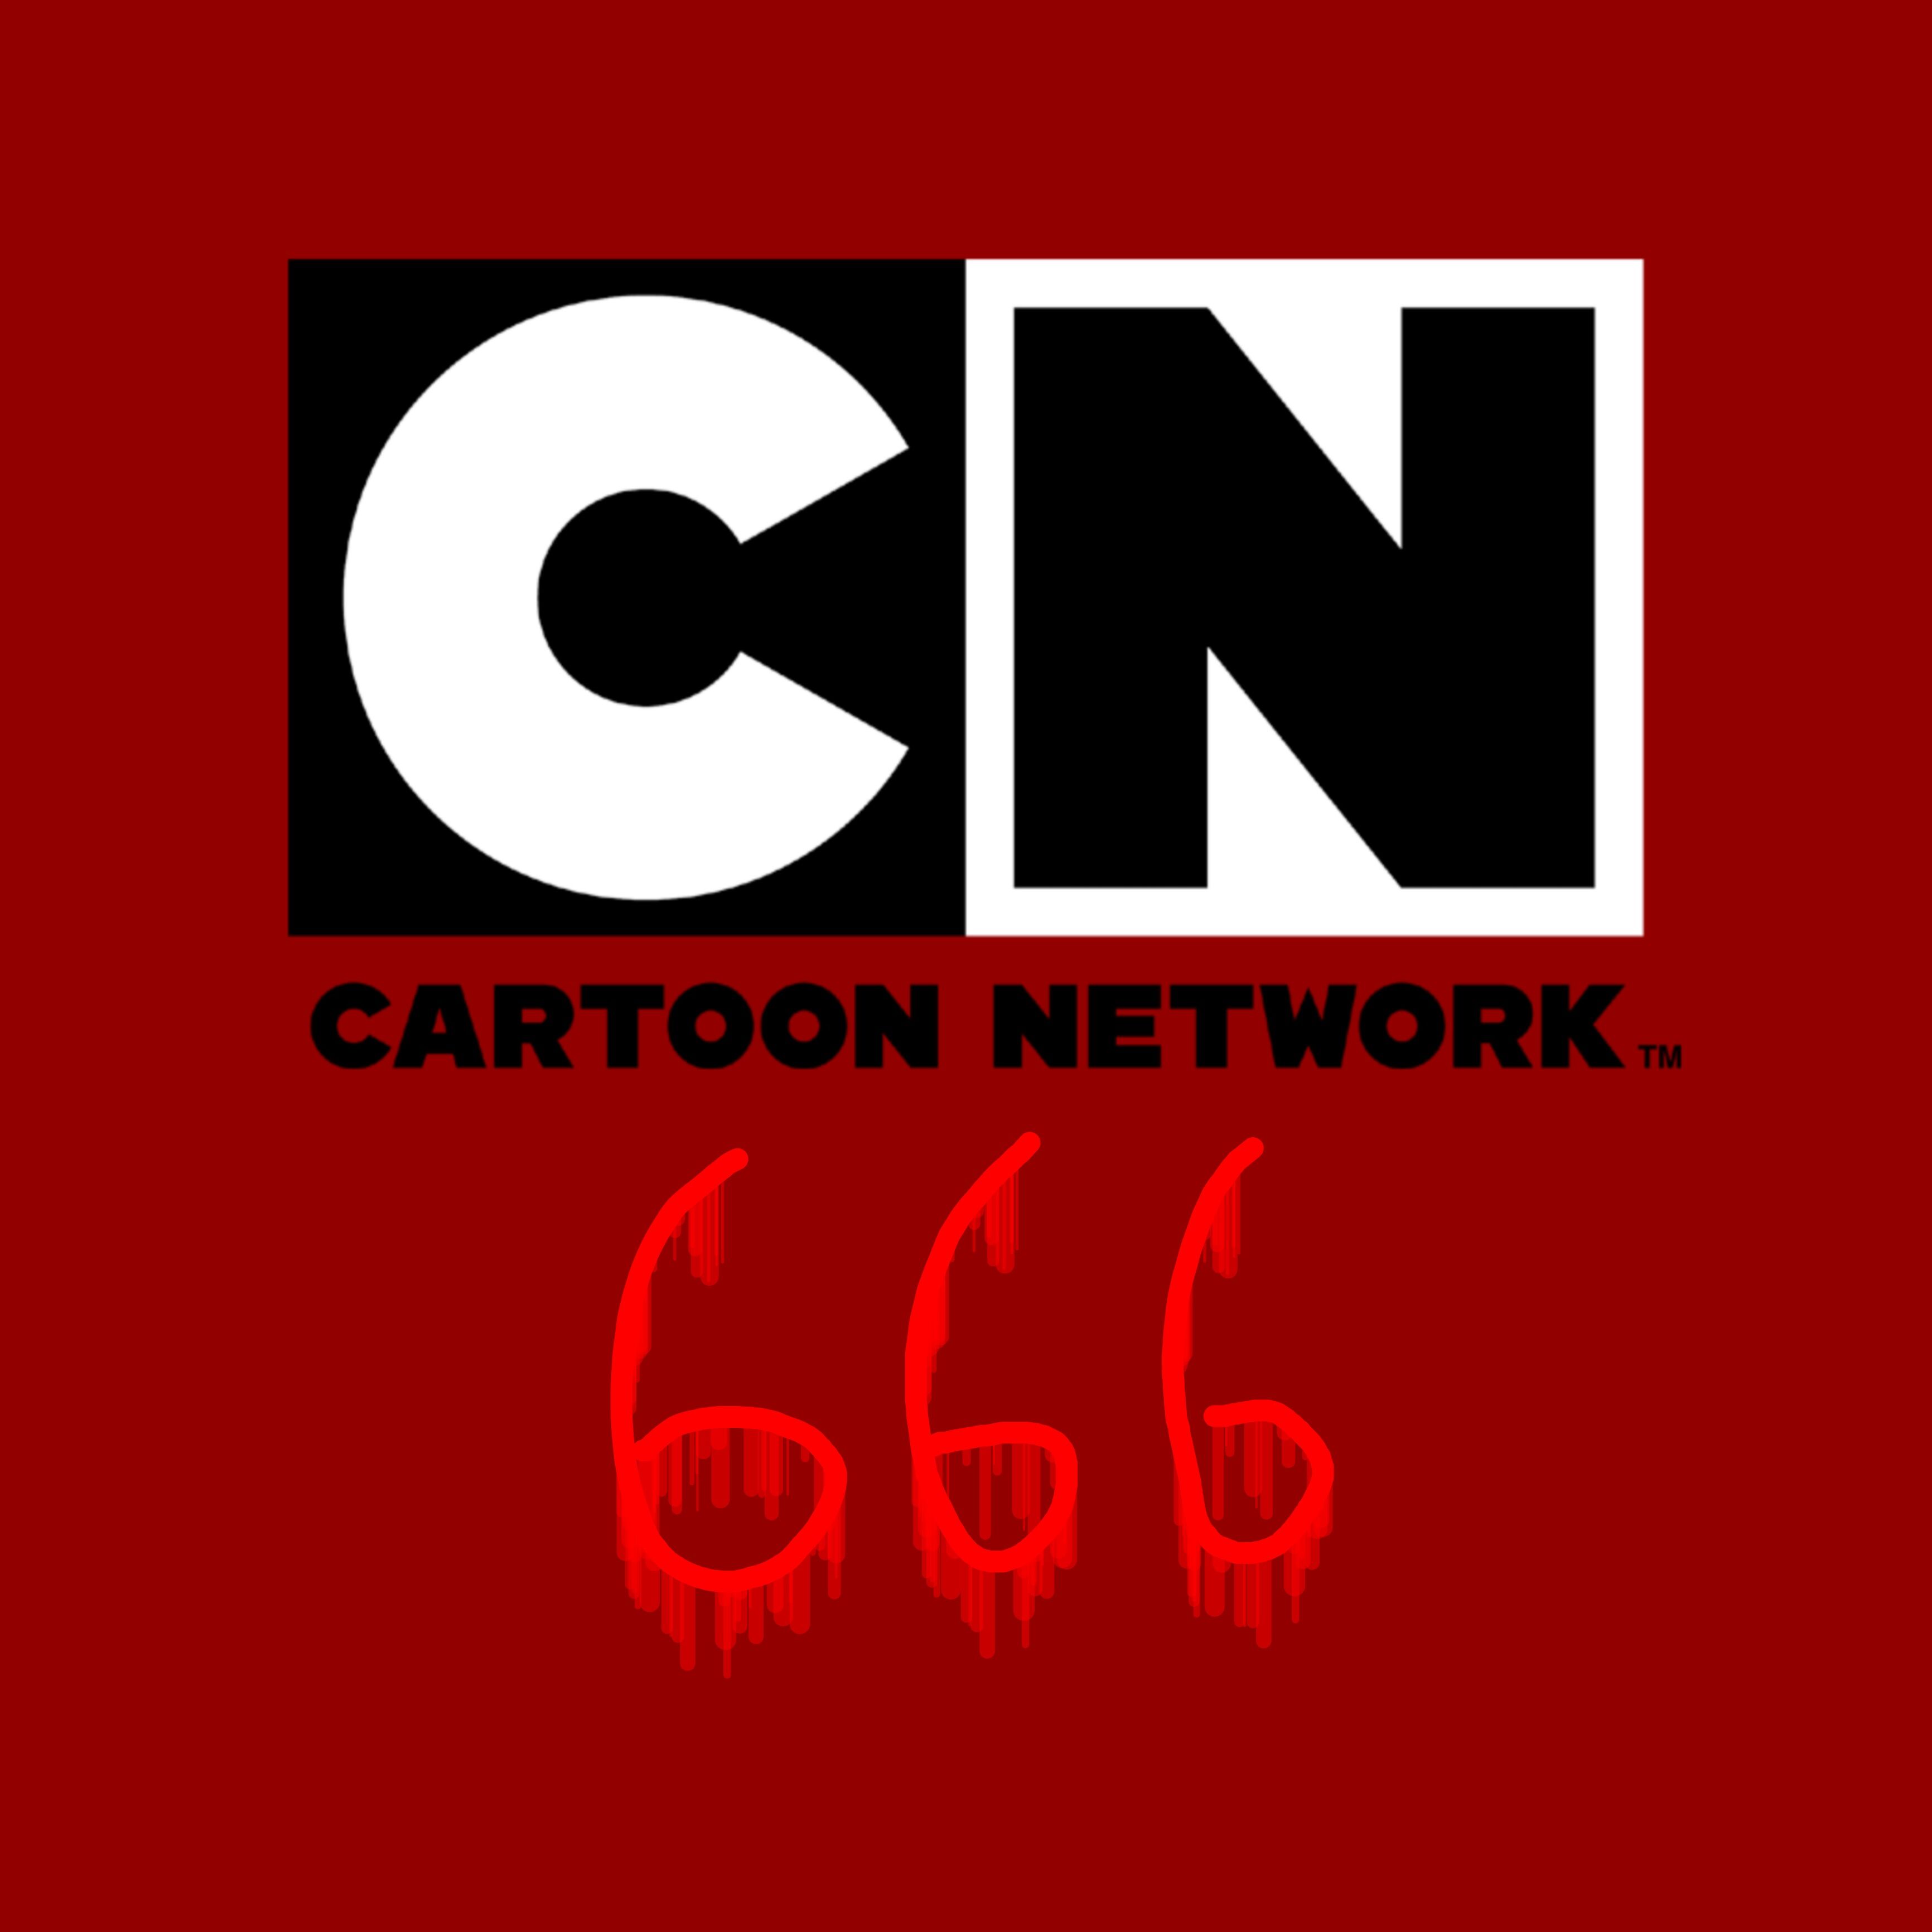 Cartoon Network 666, Wiki Creepypasta Brasil